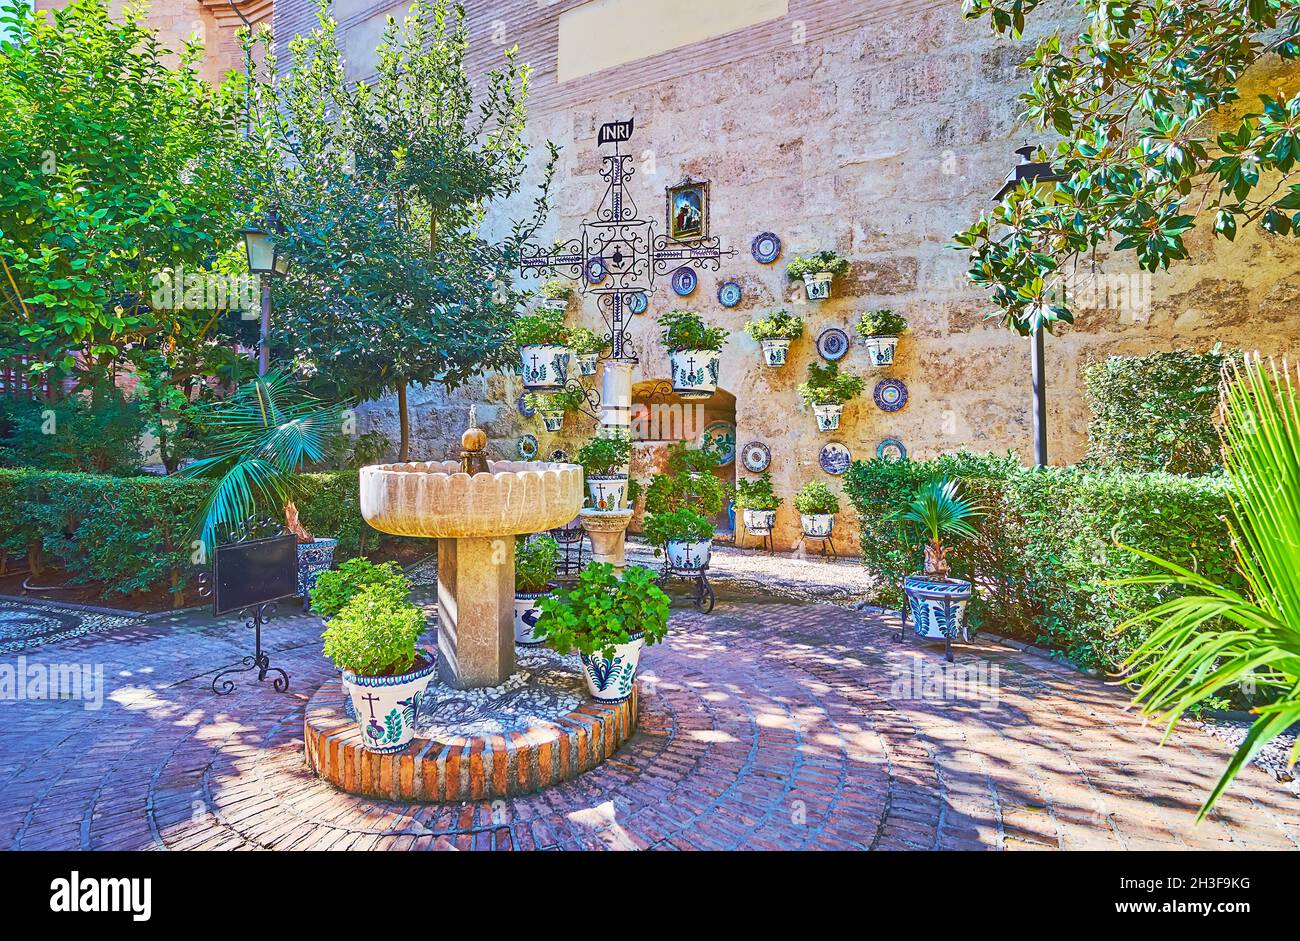 The drinking fountain and flowers in colorful ceramic pots in garden of San Juan de Dios Basilica, Granada, Spain Stock Photo